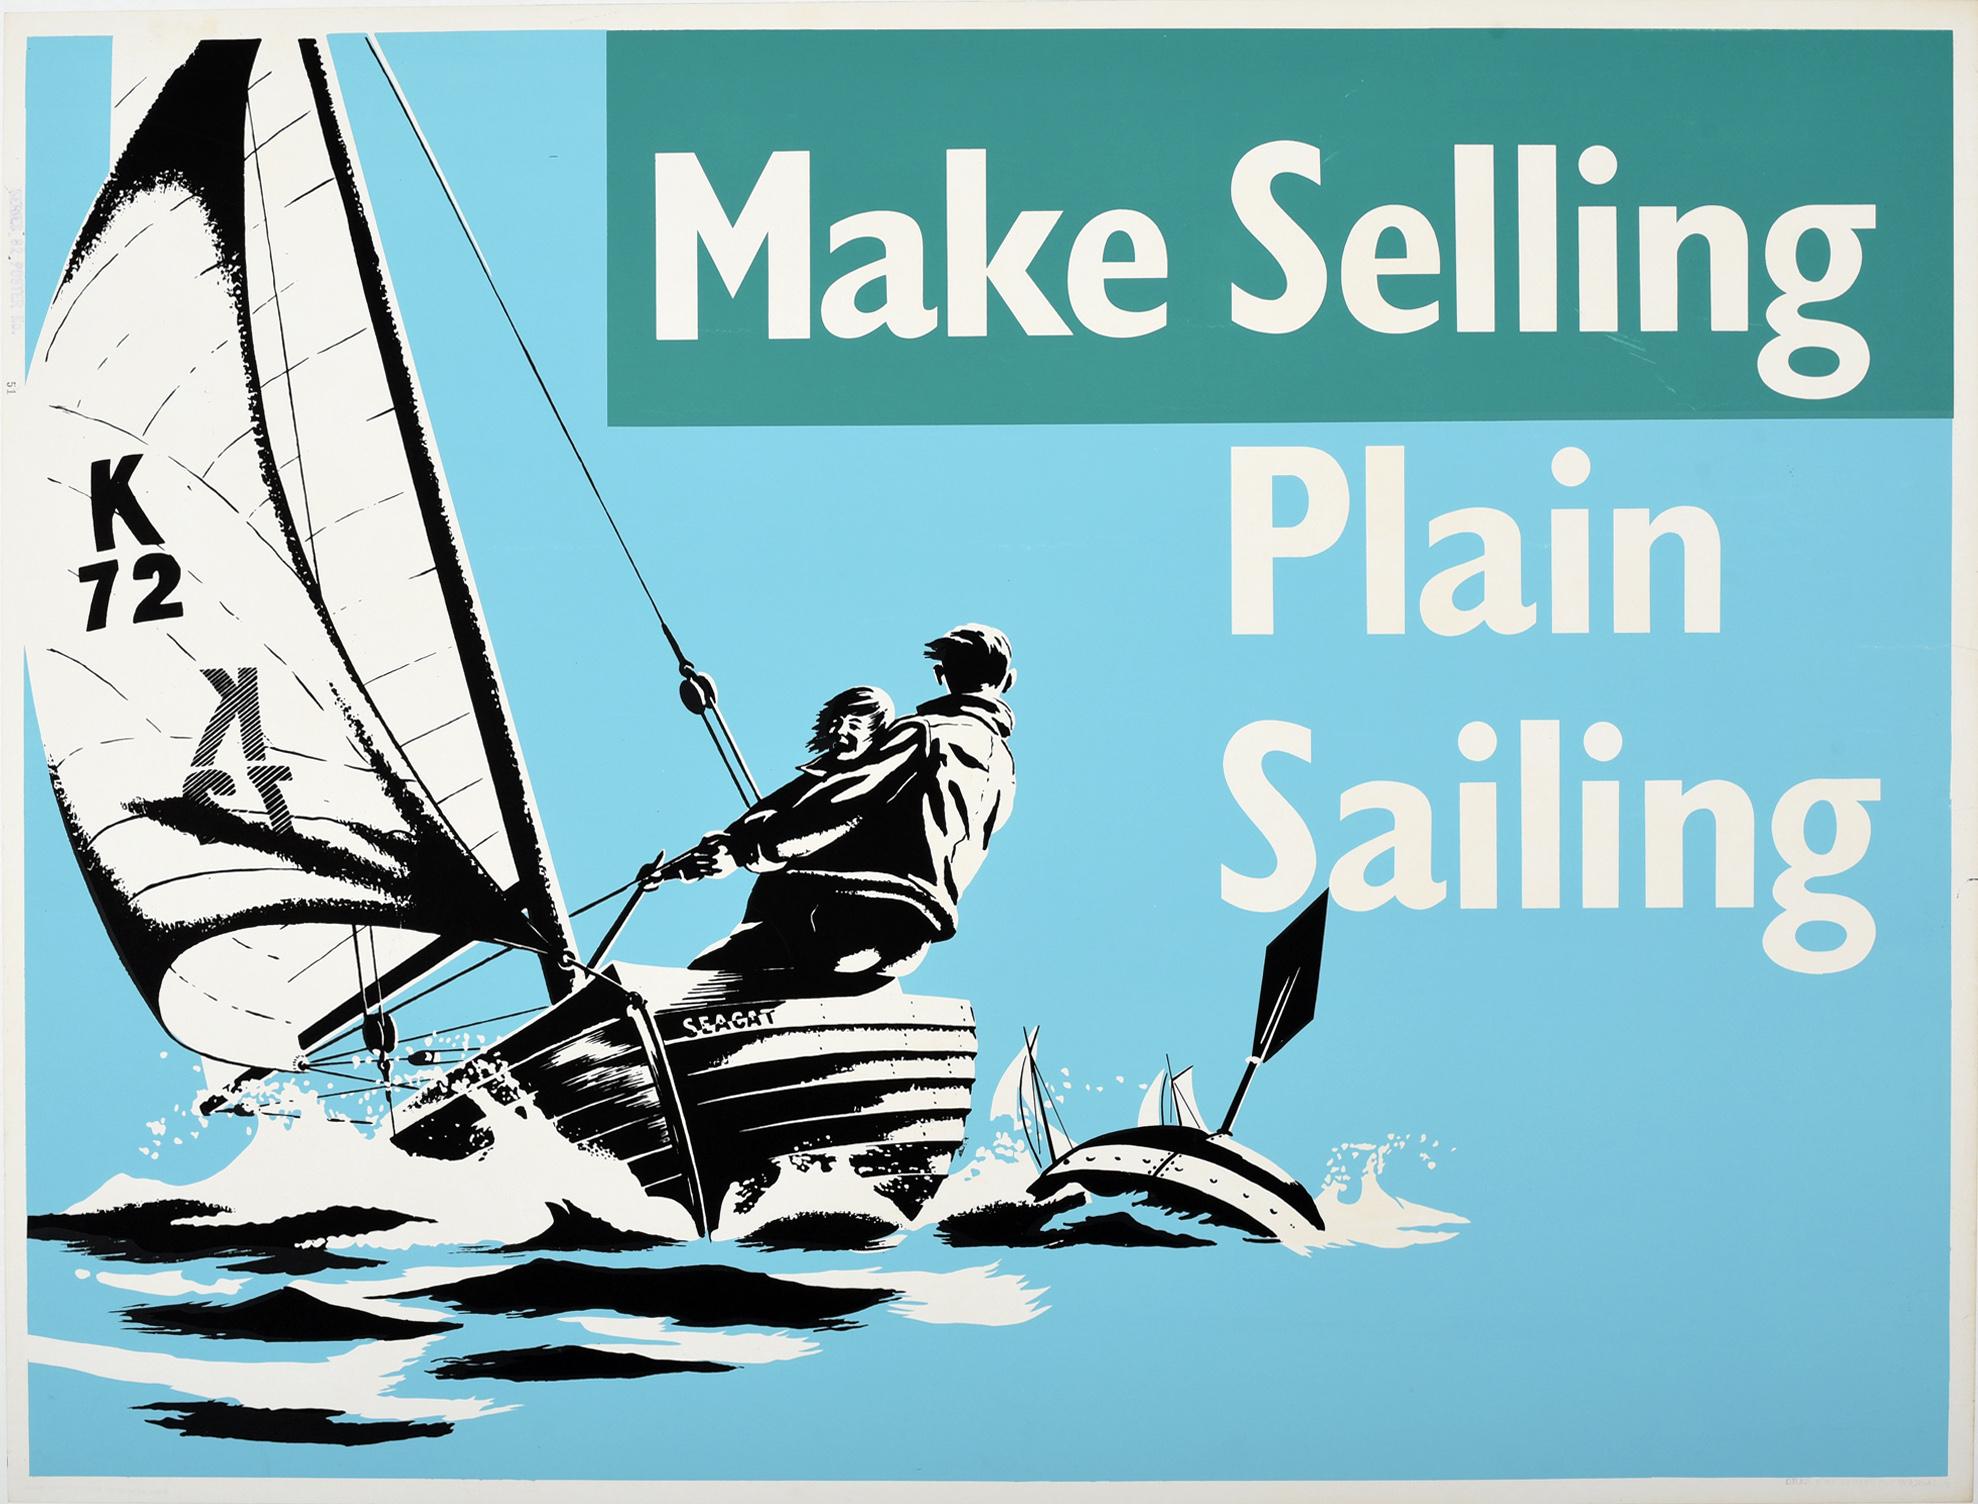 Unknown Print - Original Vintage Poster Make Selling Plain Sailing Motivation Sport Theme Design